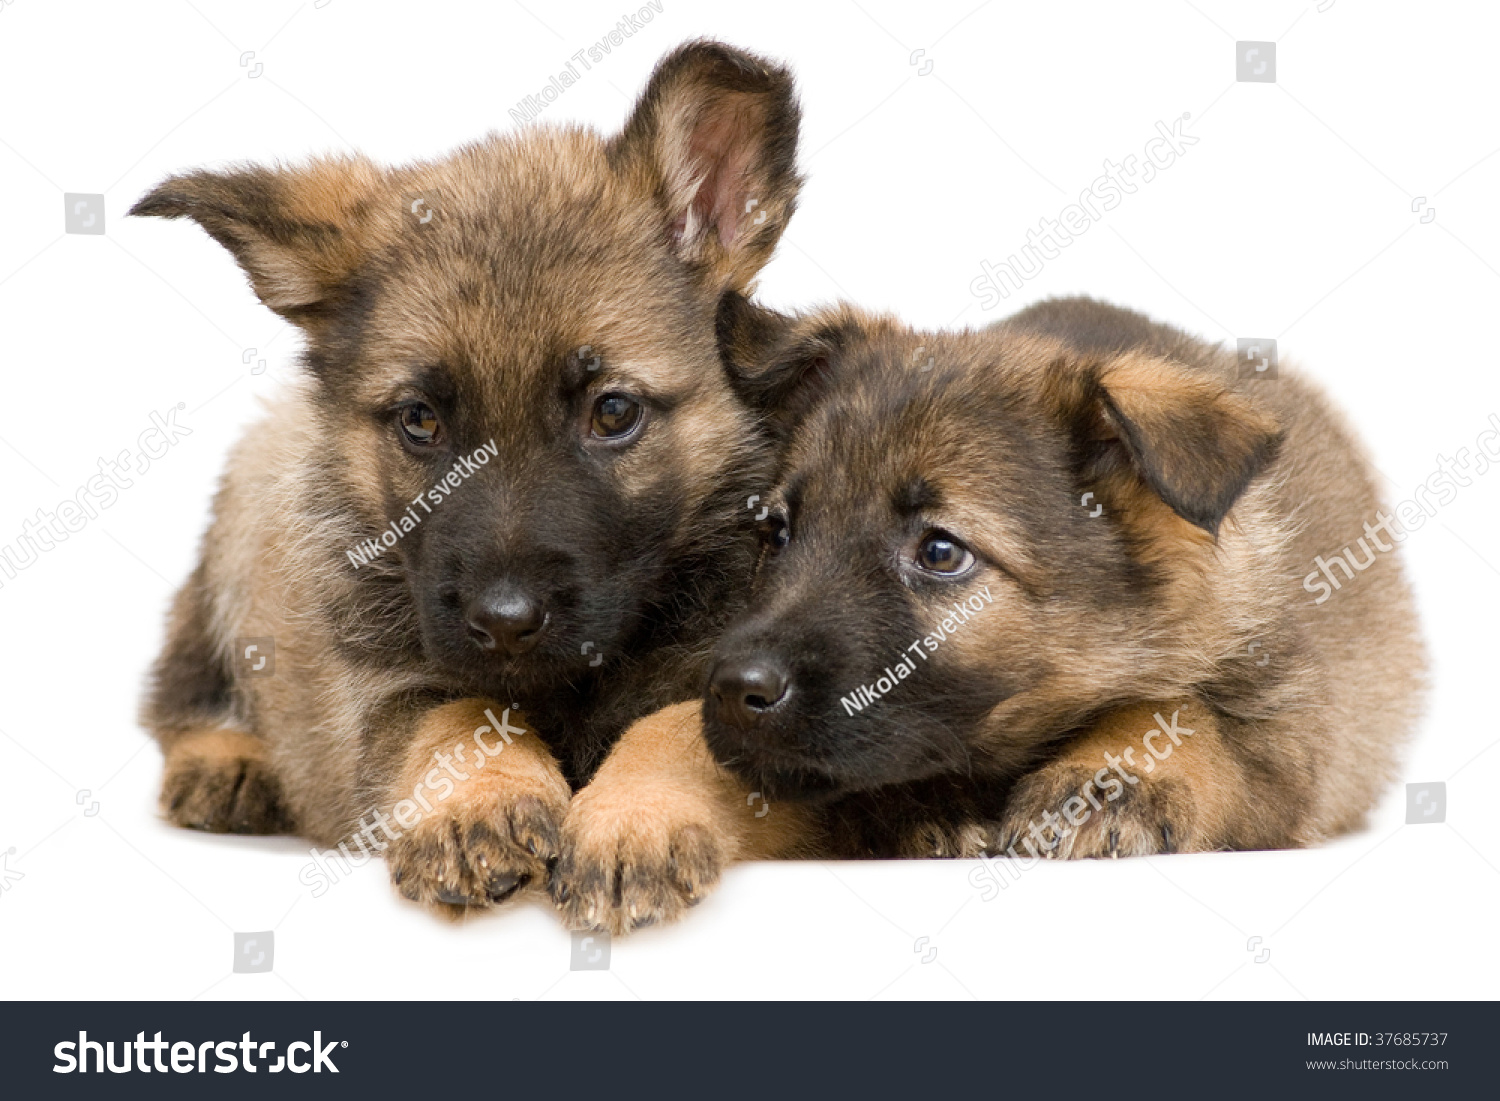 Shepherds Puppys Stock Photo 37685737 : Shutterstock